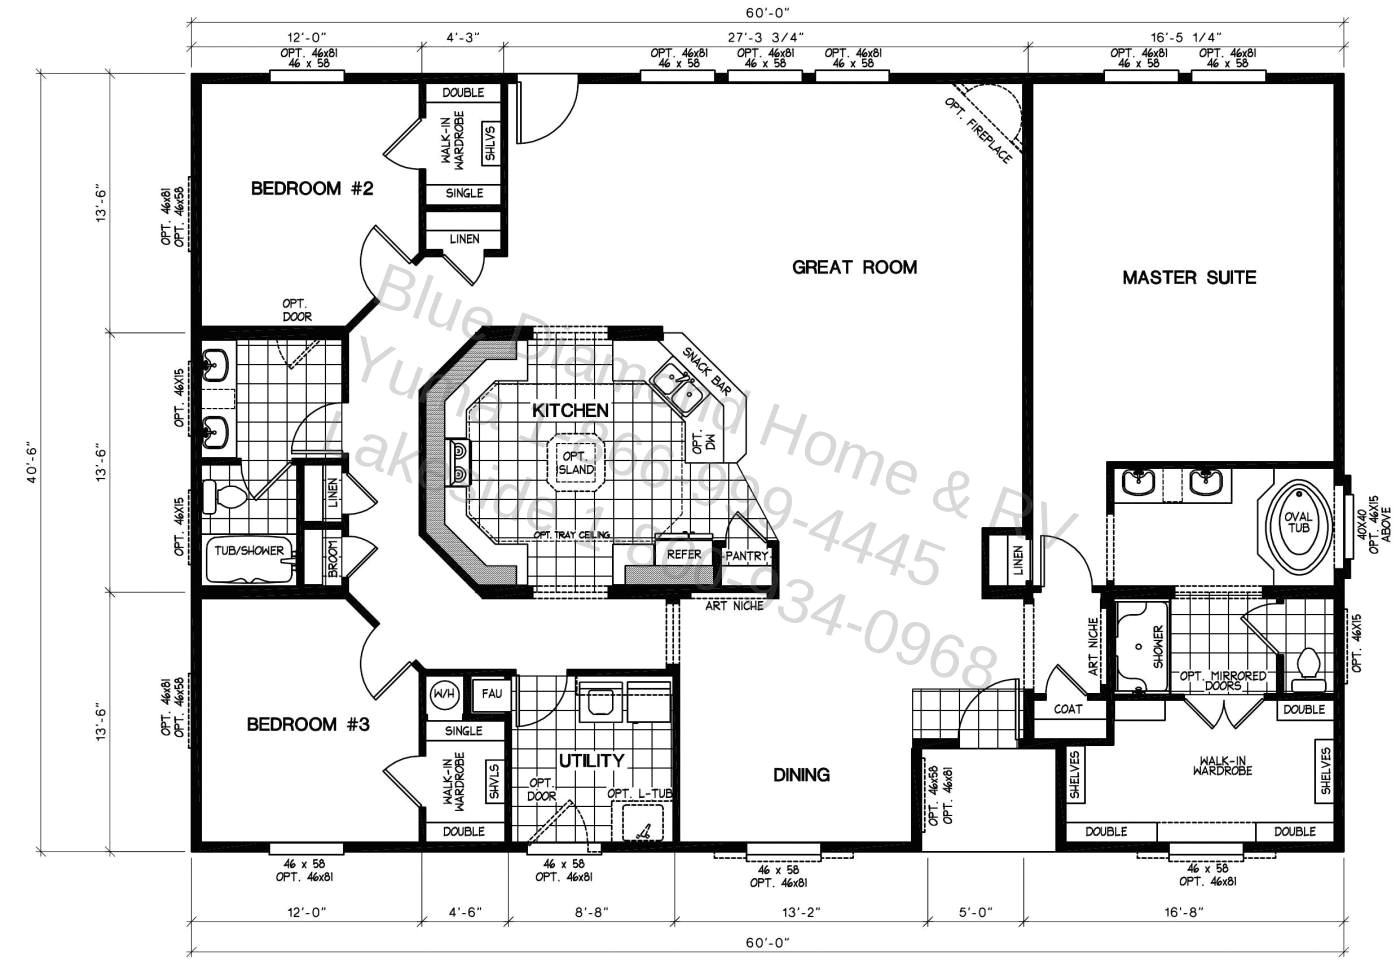 Luxury Modular Home Plans Luxury New Mobile Home Floor Plans Design with 4 Bedroom